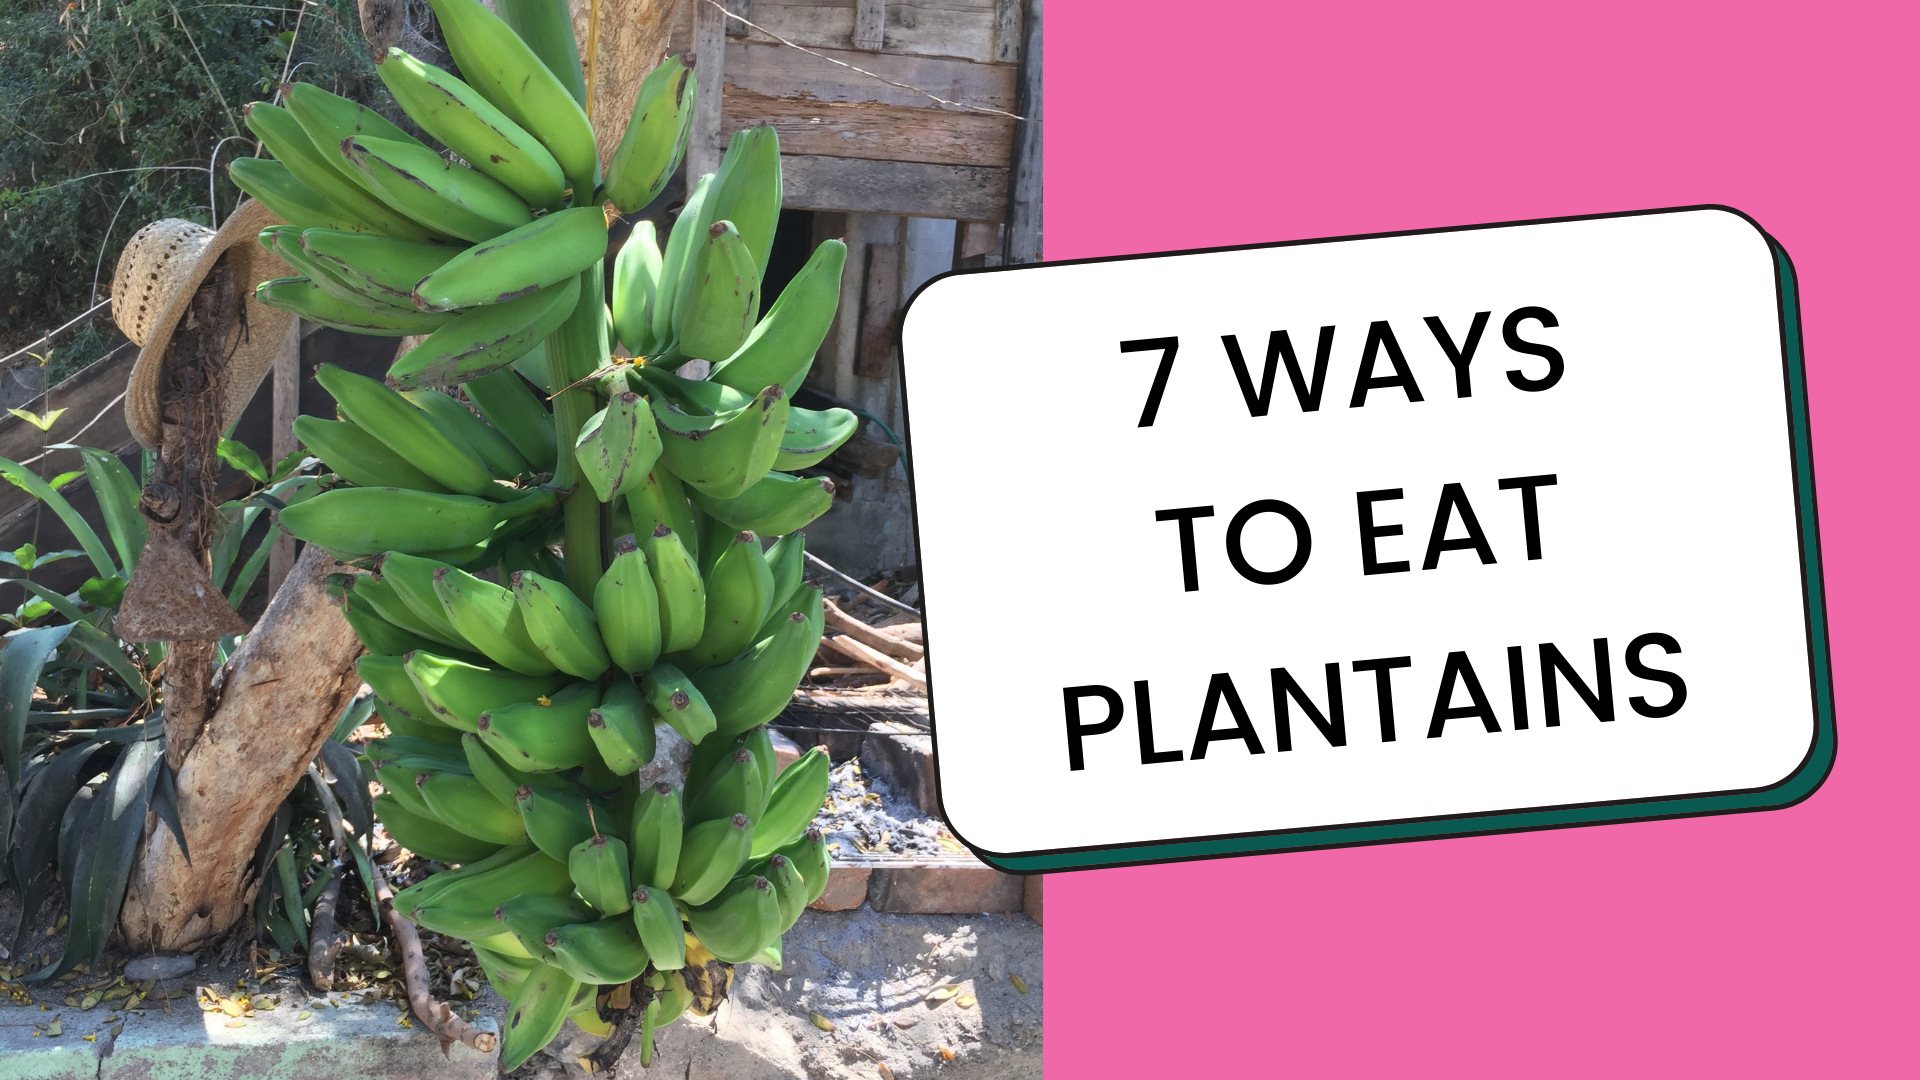 7 Ways to Eat Plantains